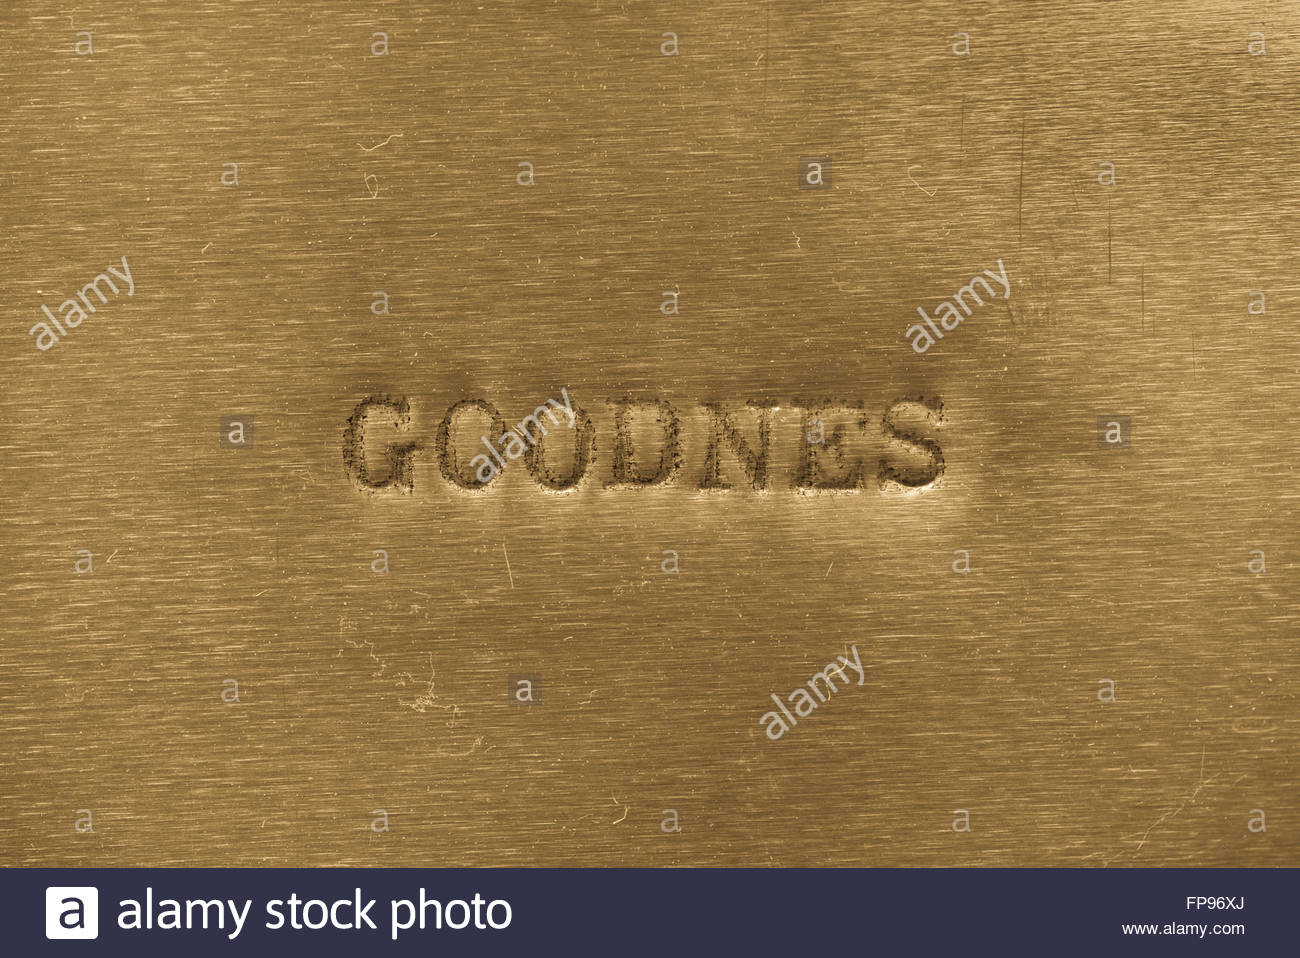 Word Goodness Printed On Golden Metallic Background Stock Photo